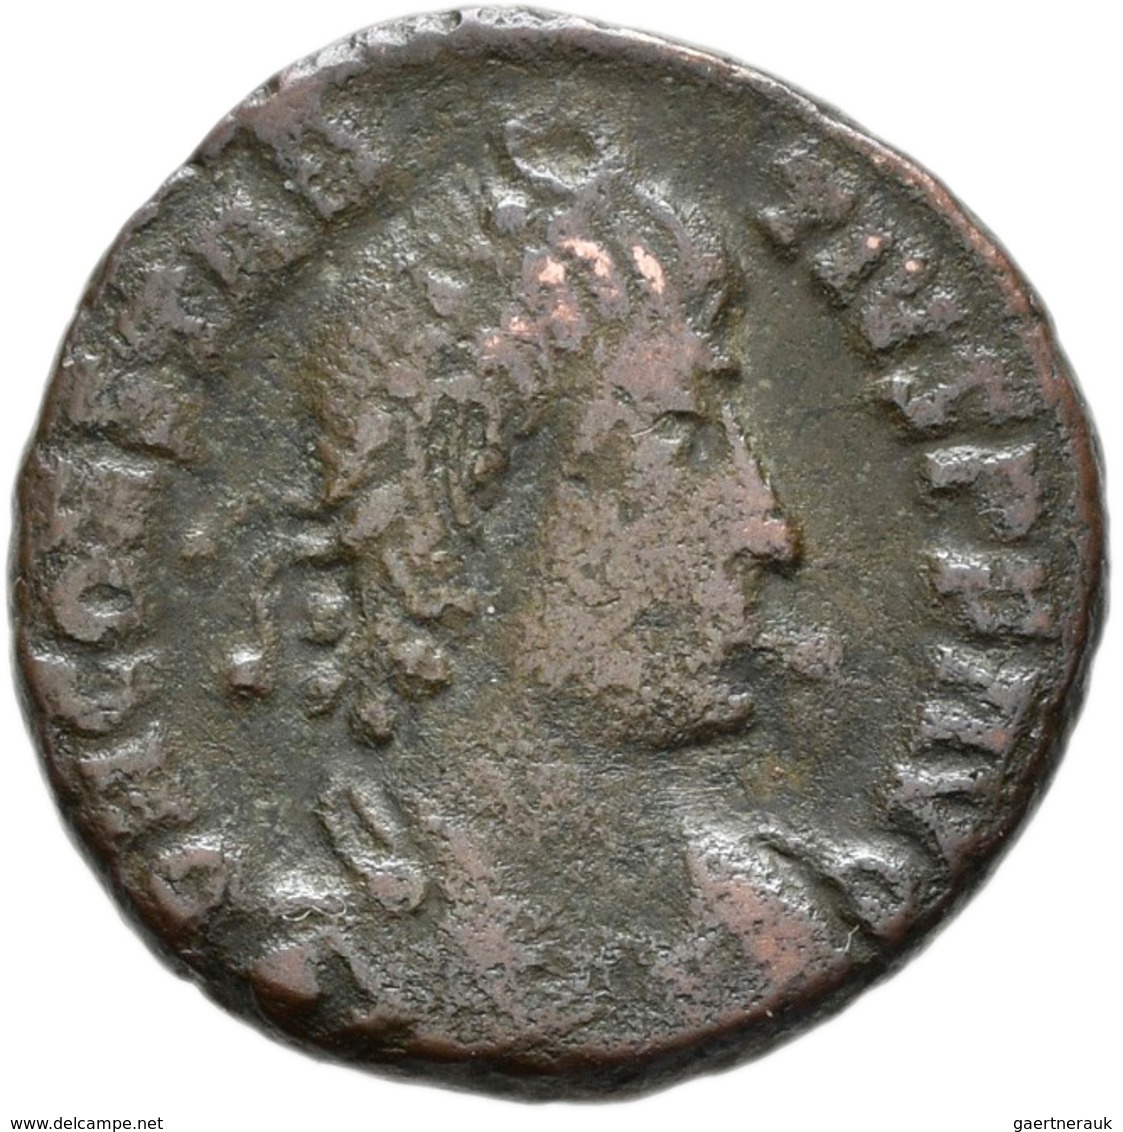 Constantius II. (324 - 337 - 361): Constantius II. 324-361: Kleinbronze, 2,71 G, Sehr Schön. - L'Empire Chrétien (307 à 363)